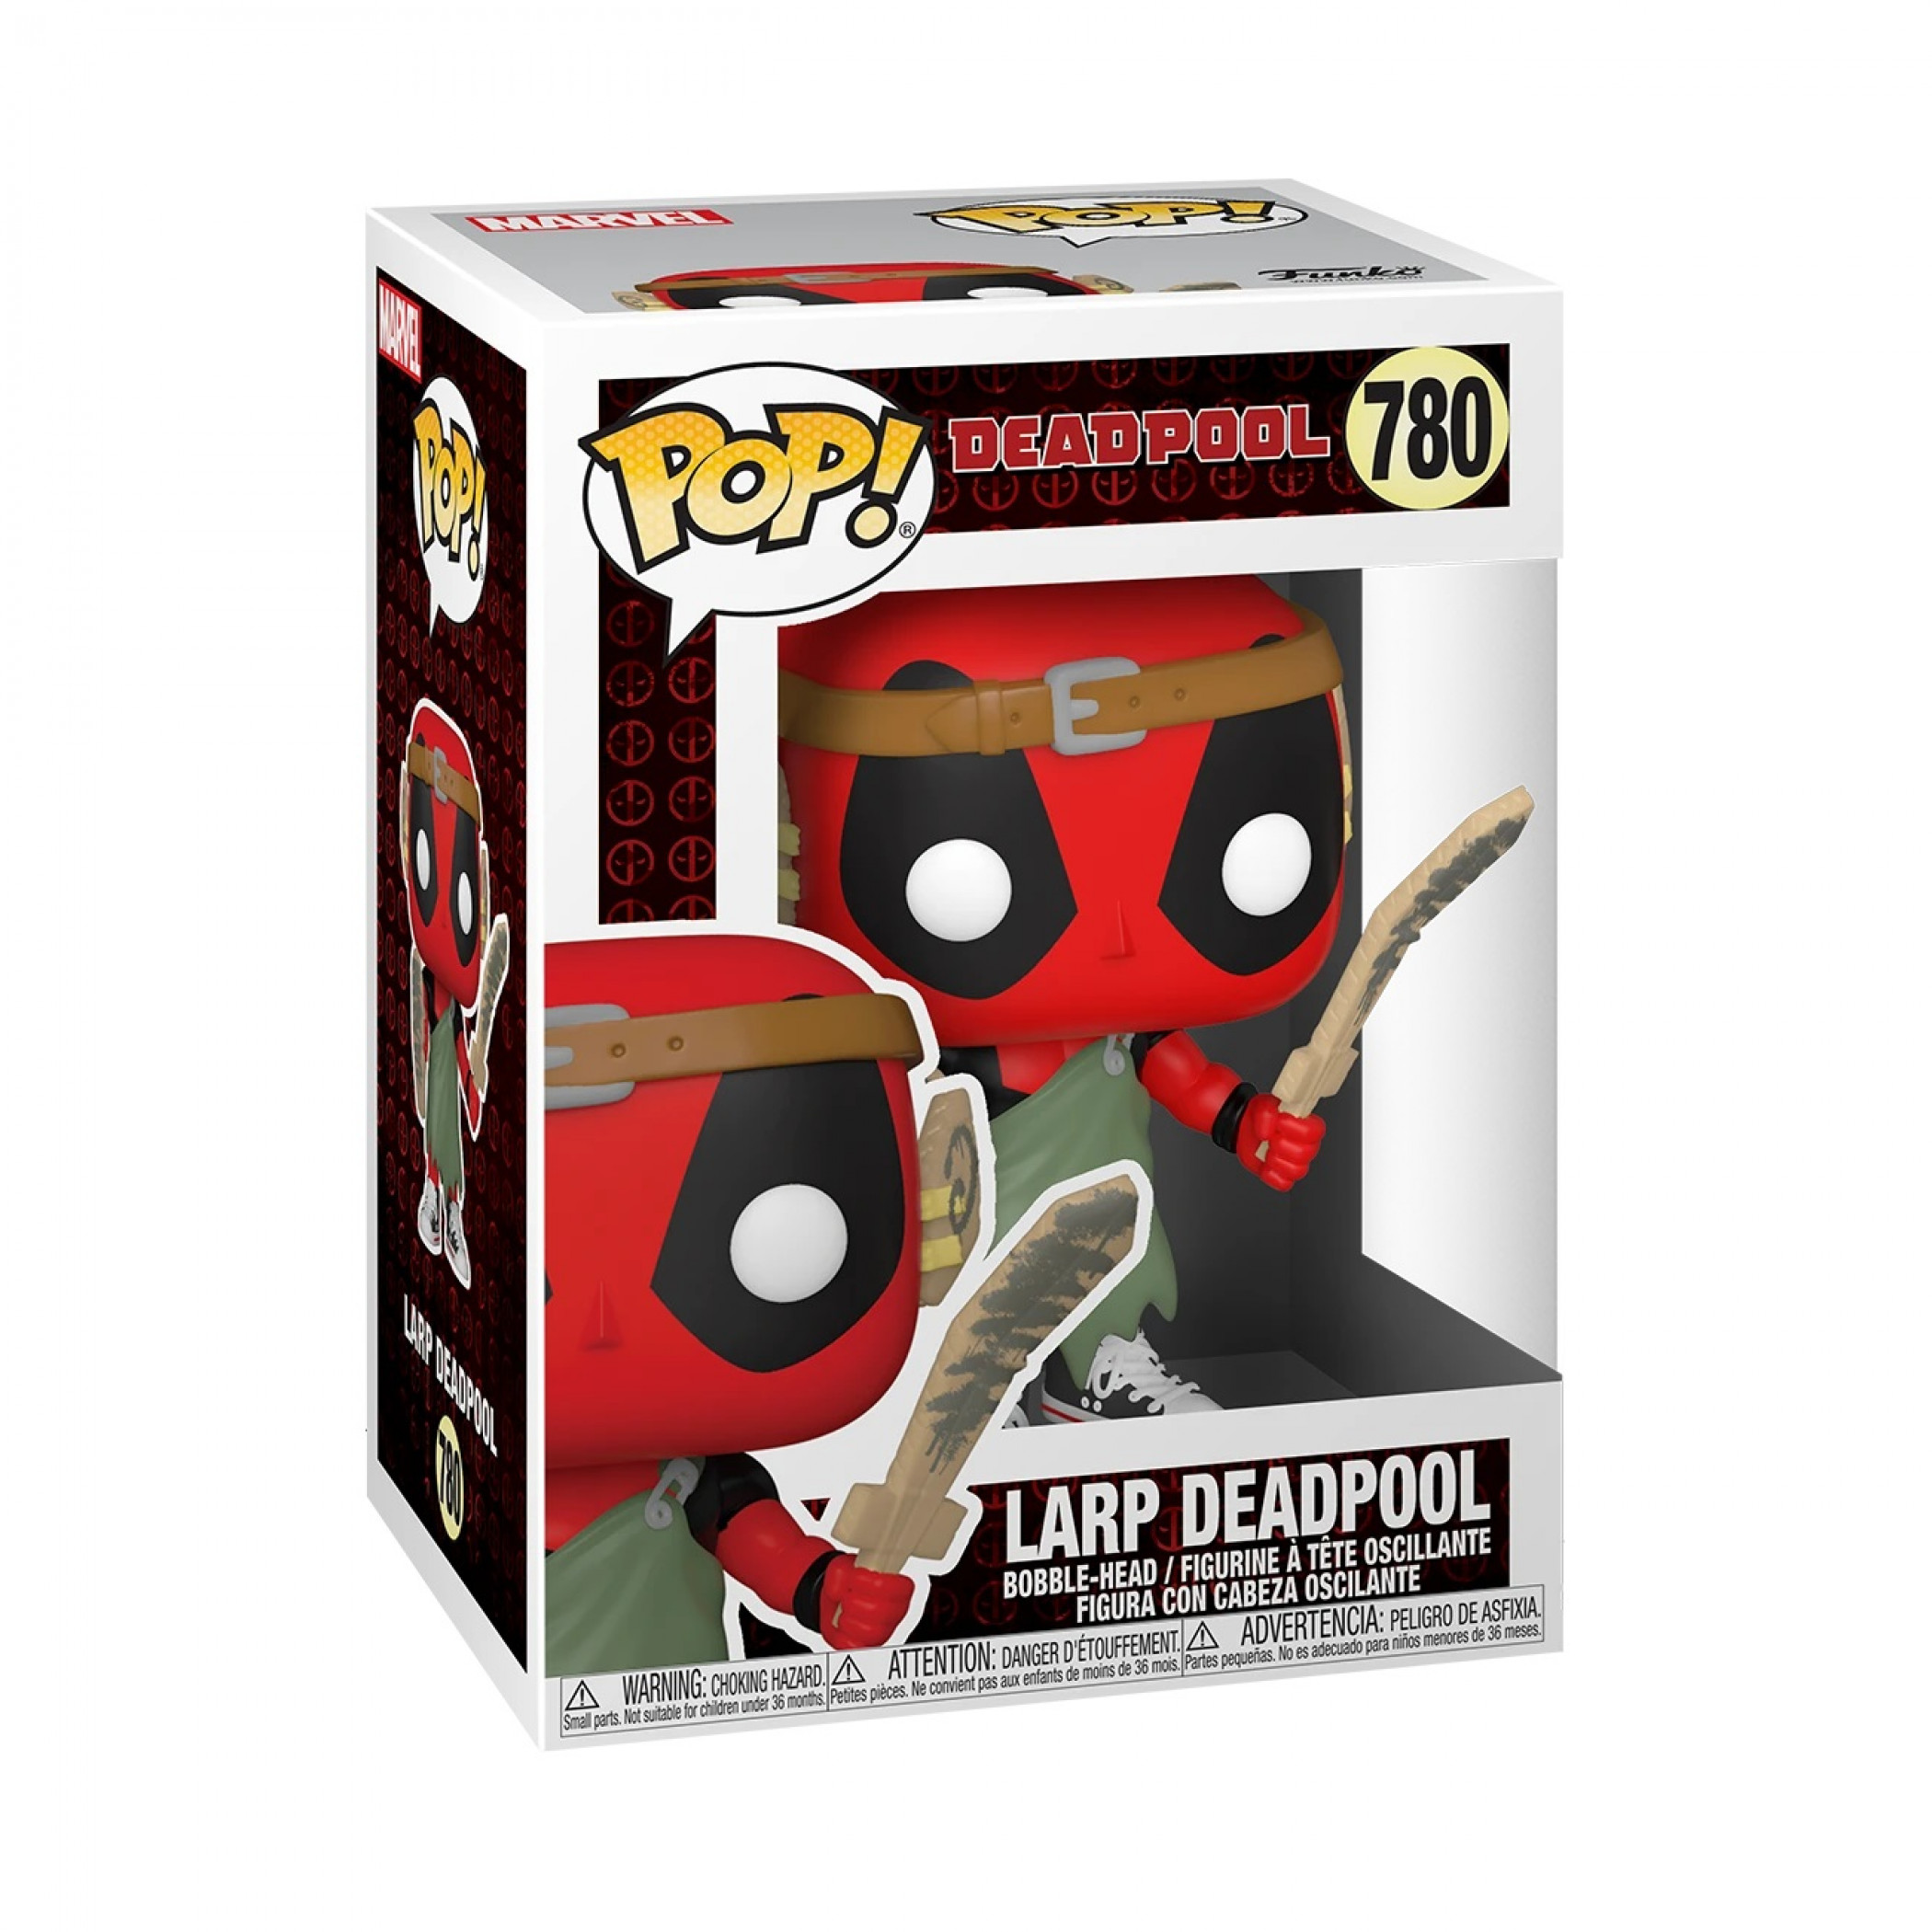 Deadpool 30th Anniversary LARPing Deadpool Funko Pop! Vinyl Figure